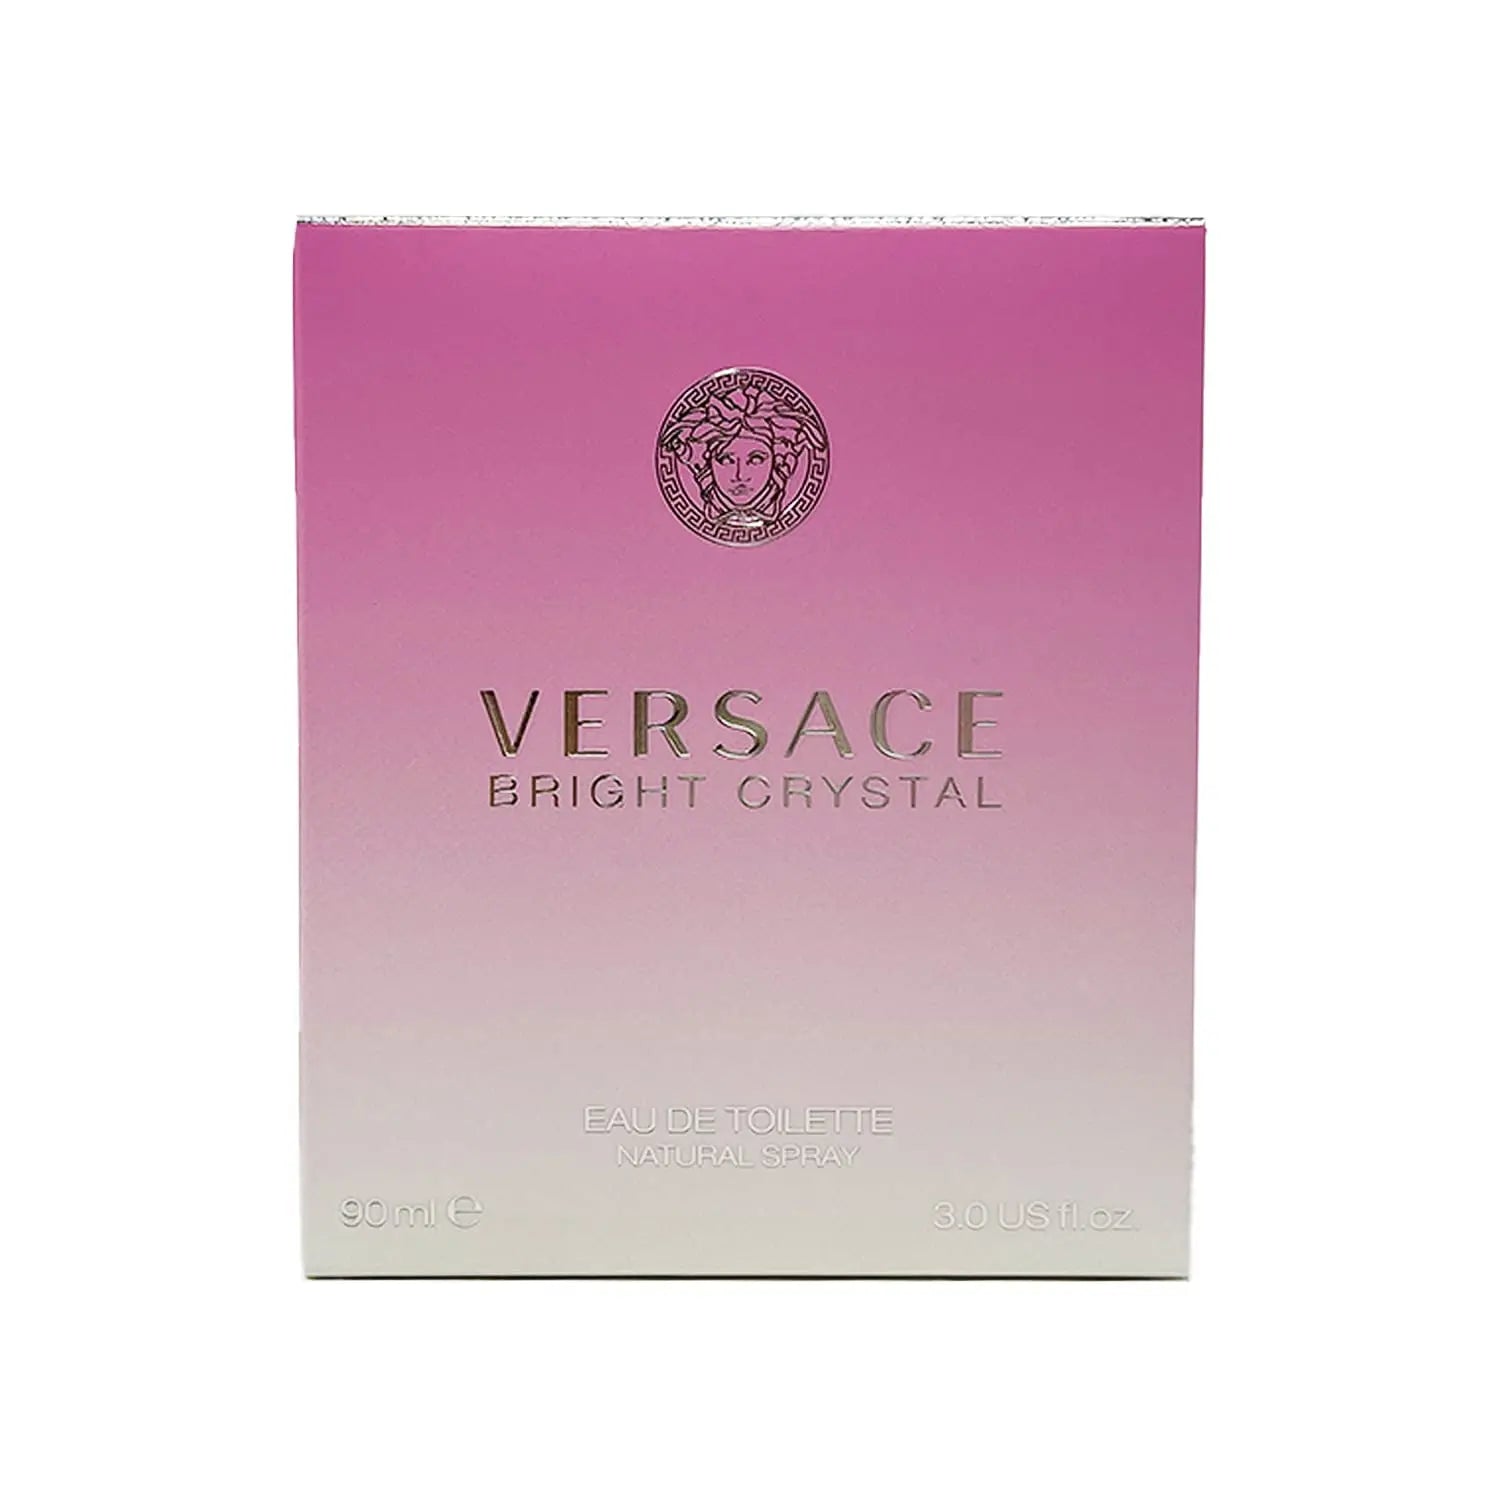 Versace Bright Crystal By Versace for Women Eau-de-toillete Spray, 1.7 Fl Oz